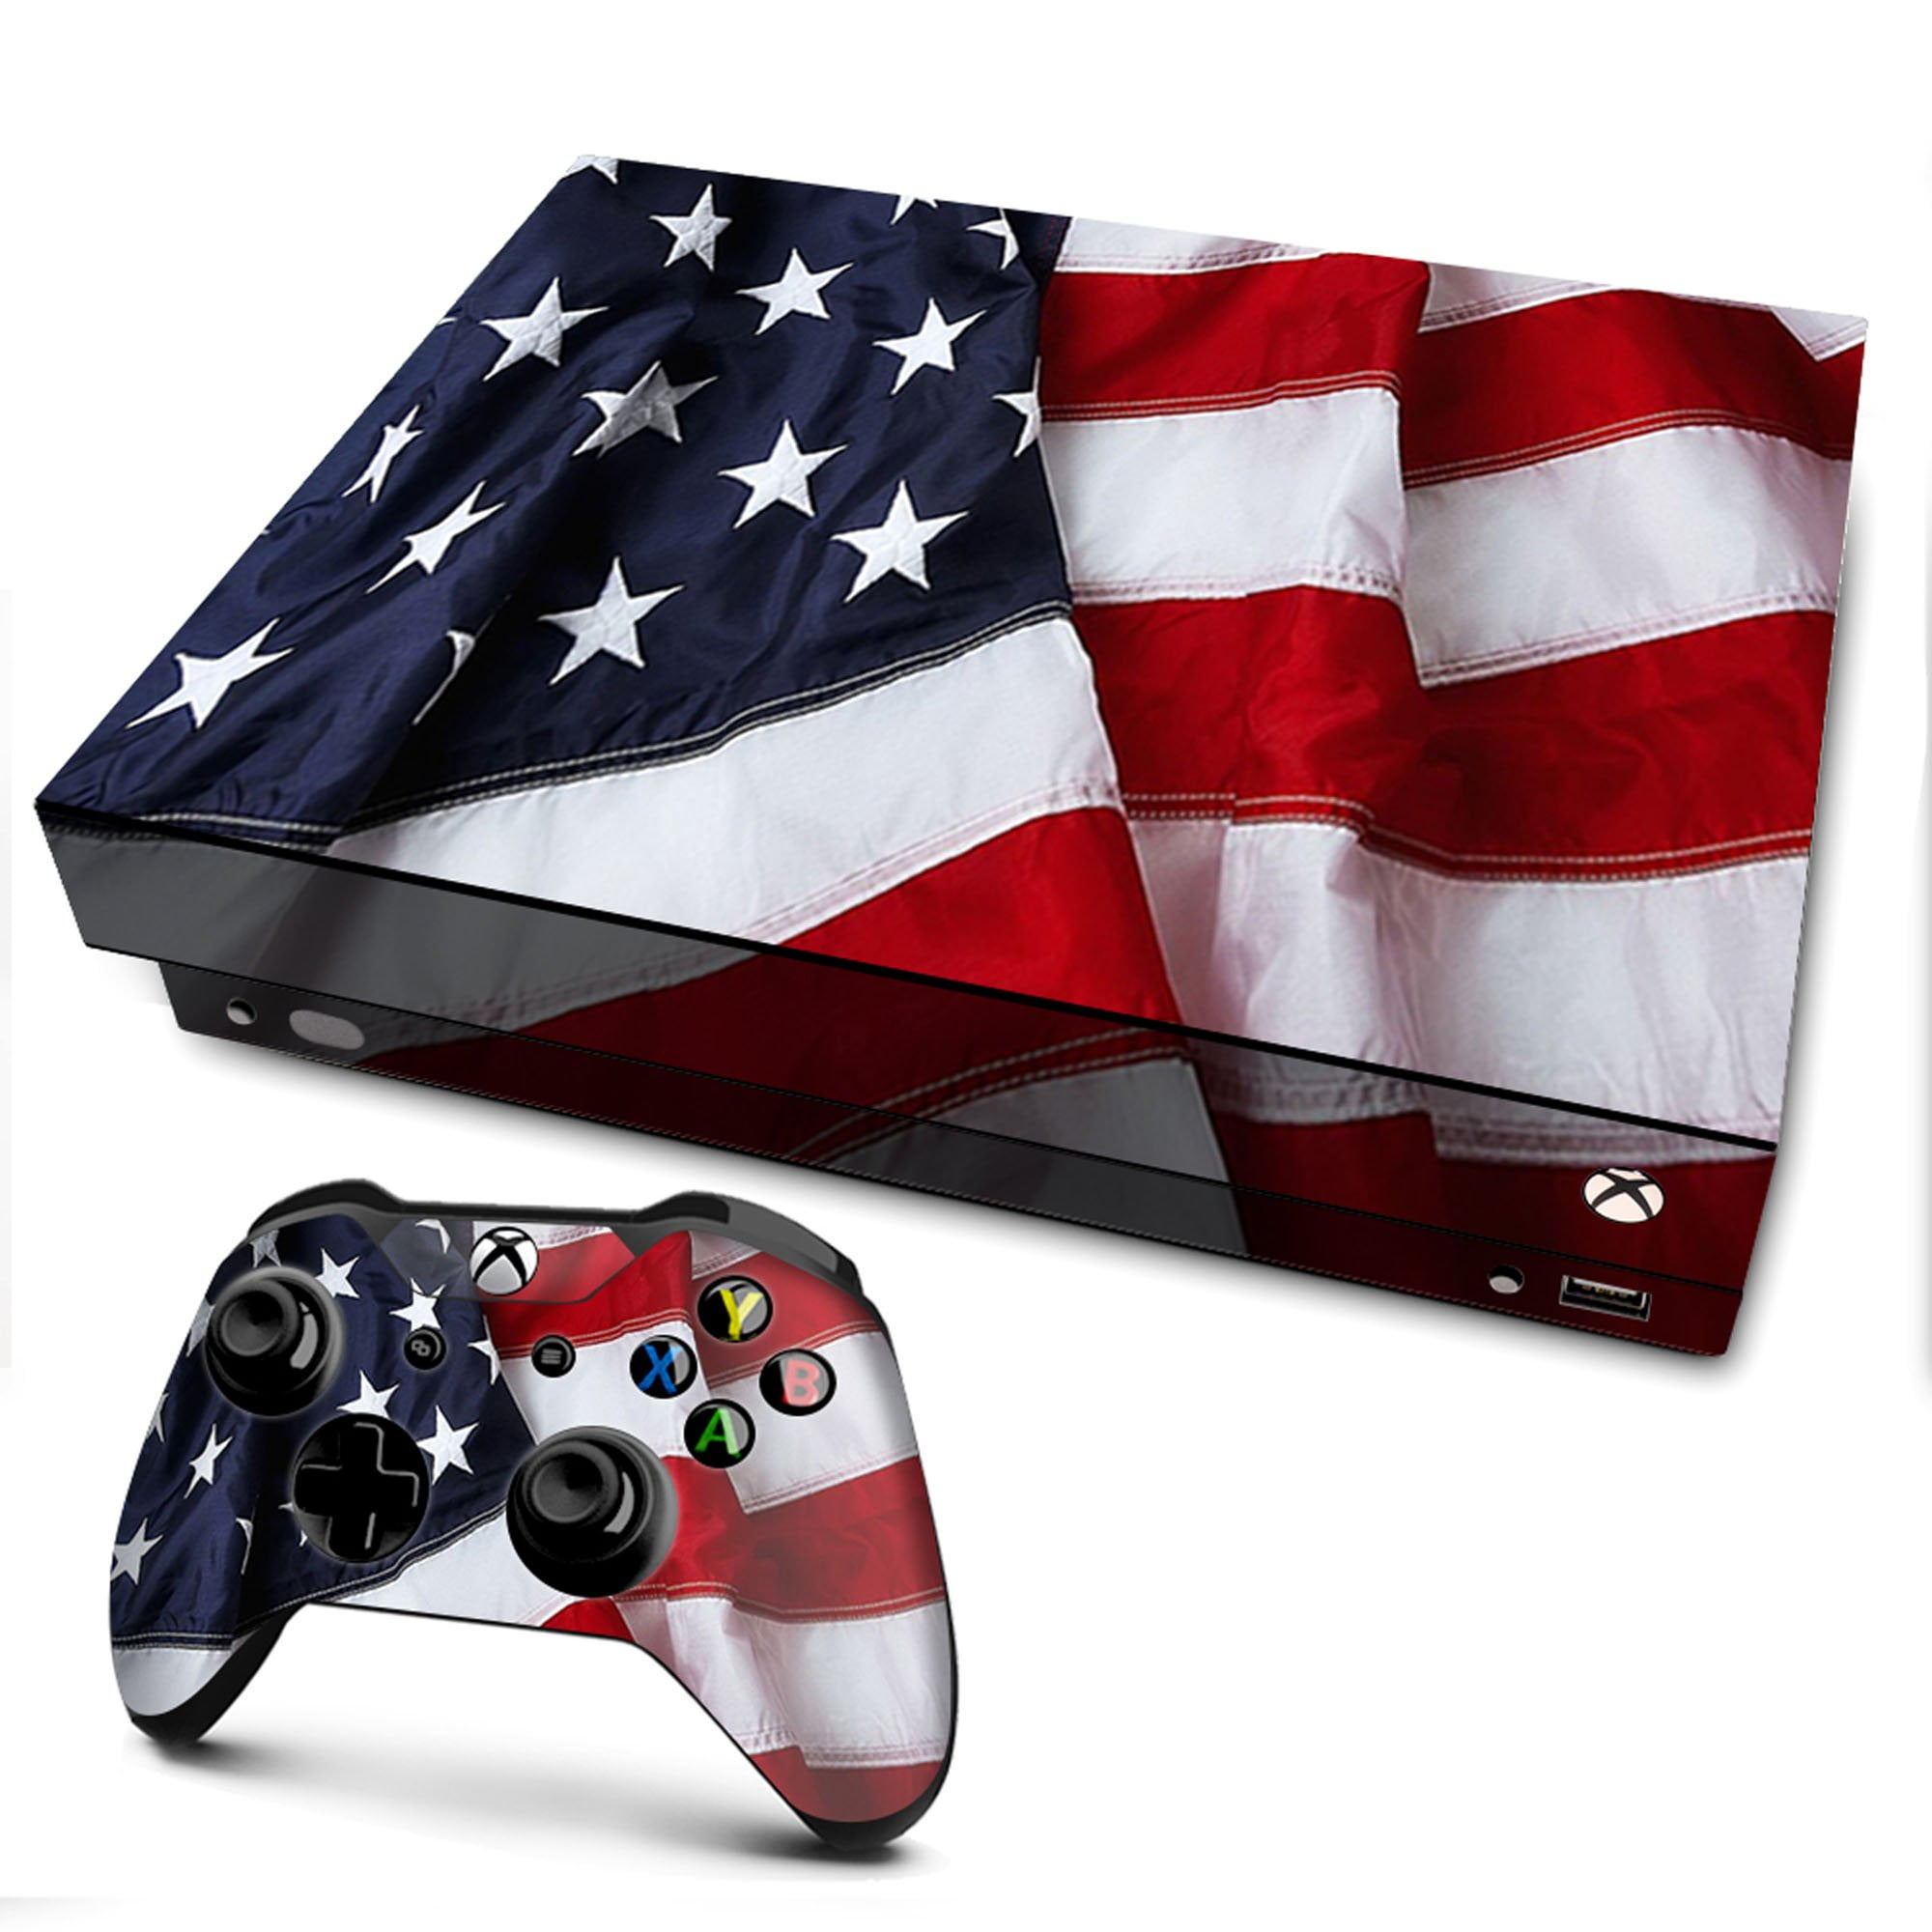 Kietelen discretie Keer terug Skins Decal Vinyl Wrap for Xbox One X Console - decal stickers skins cover - US Flag USA America - Walmart.com